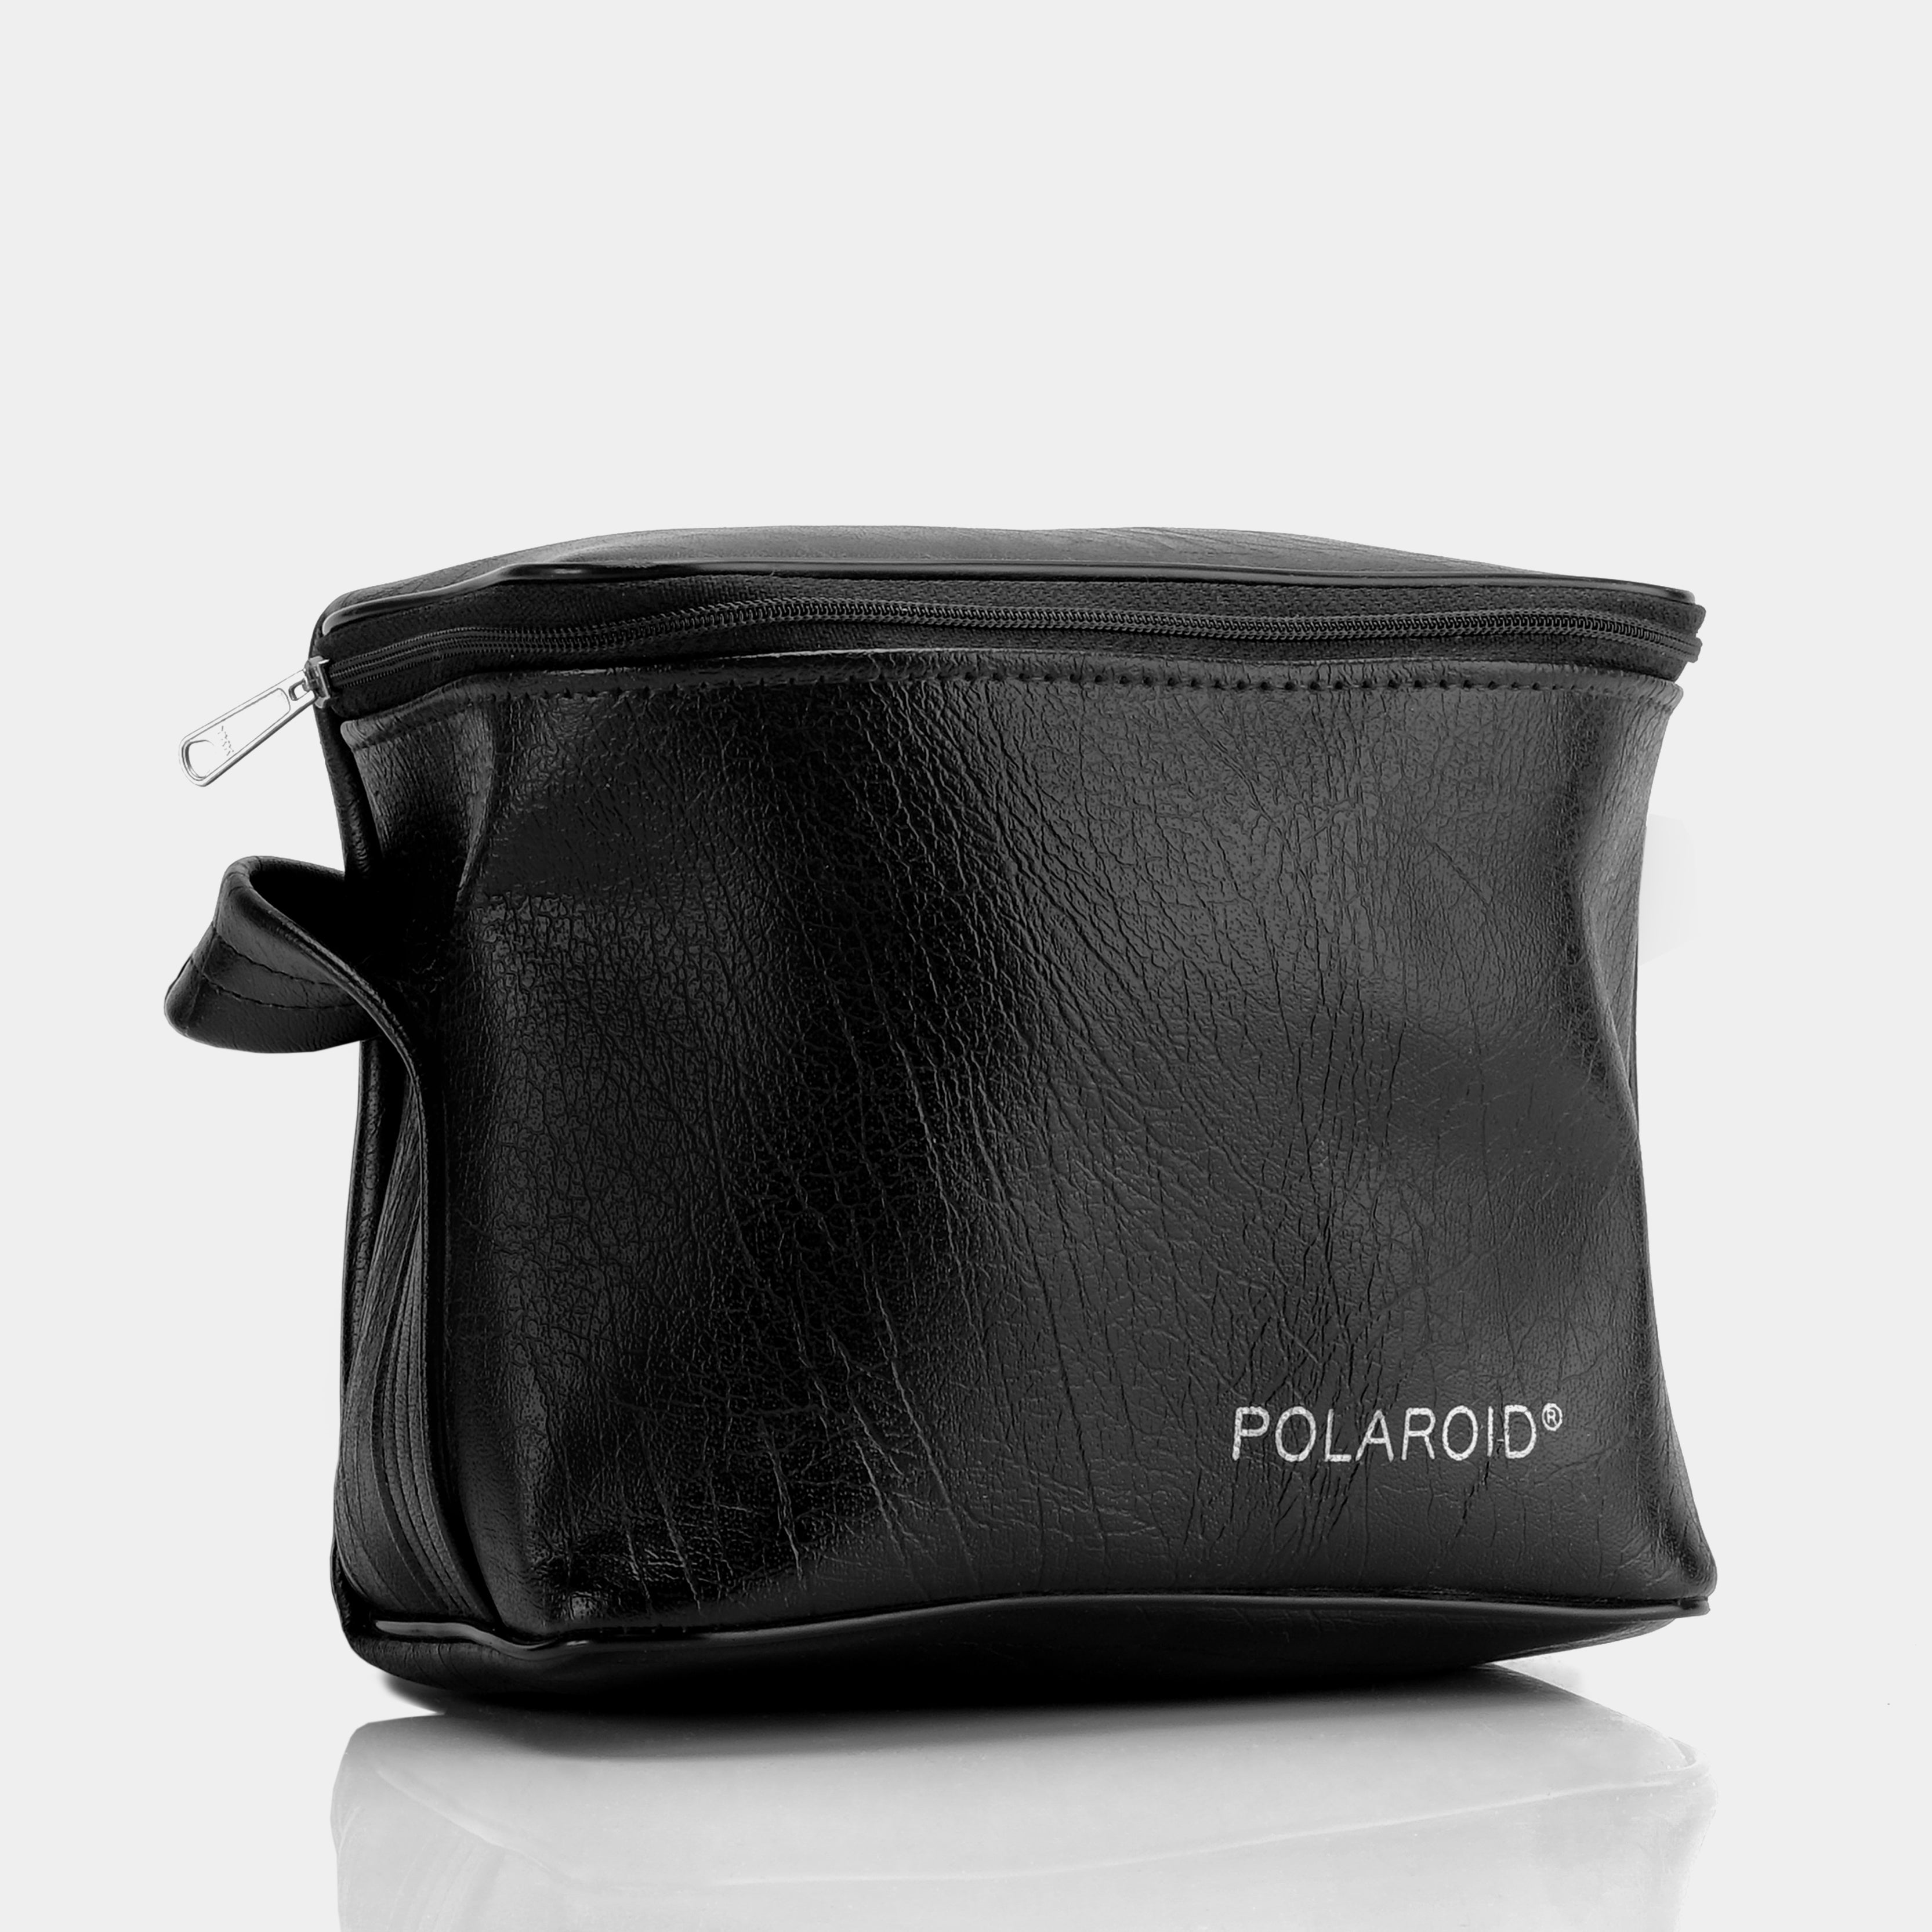 Polaroid Box Camera Bag - White